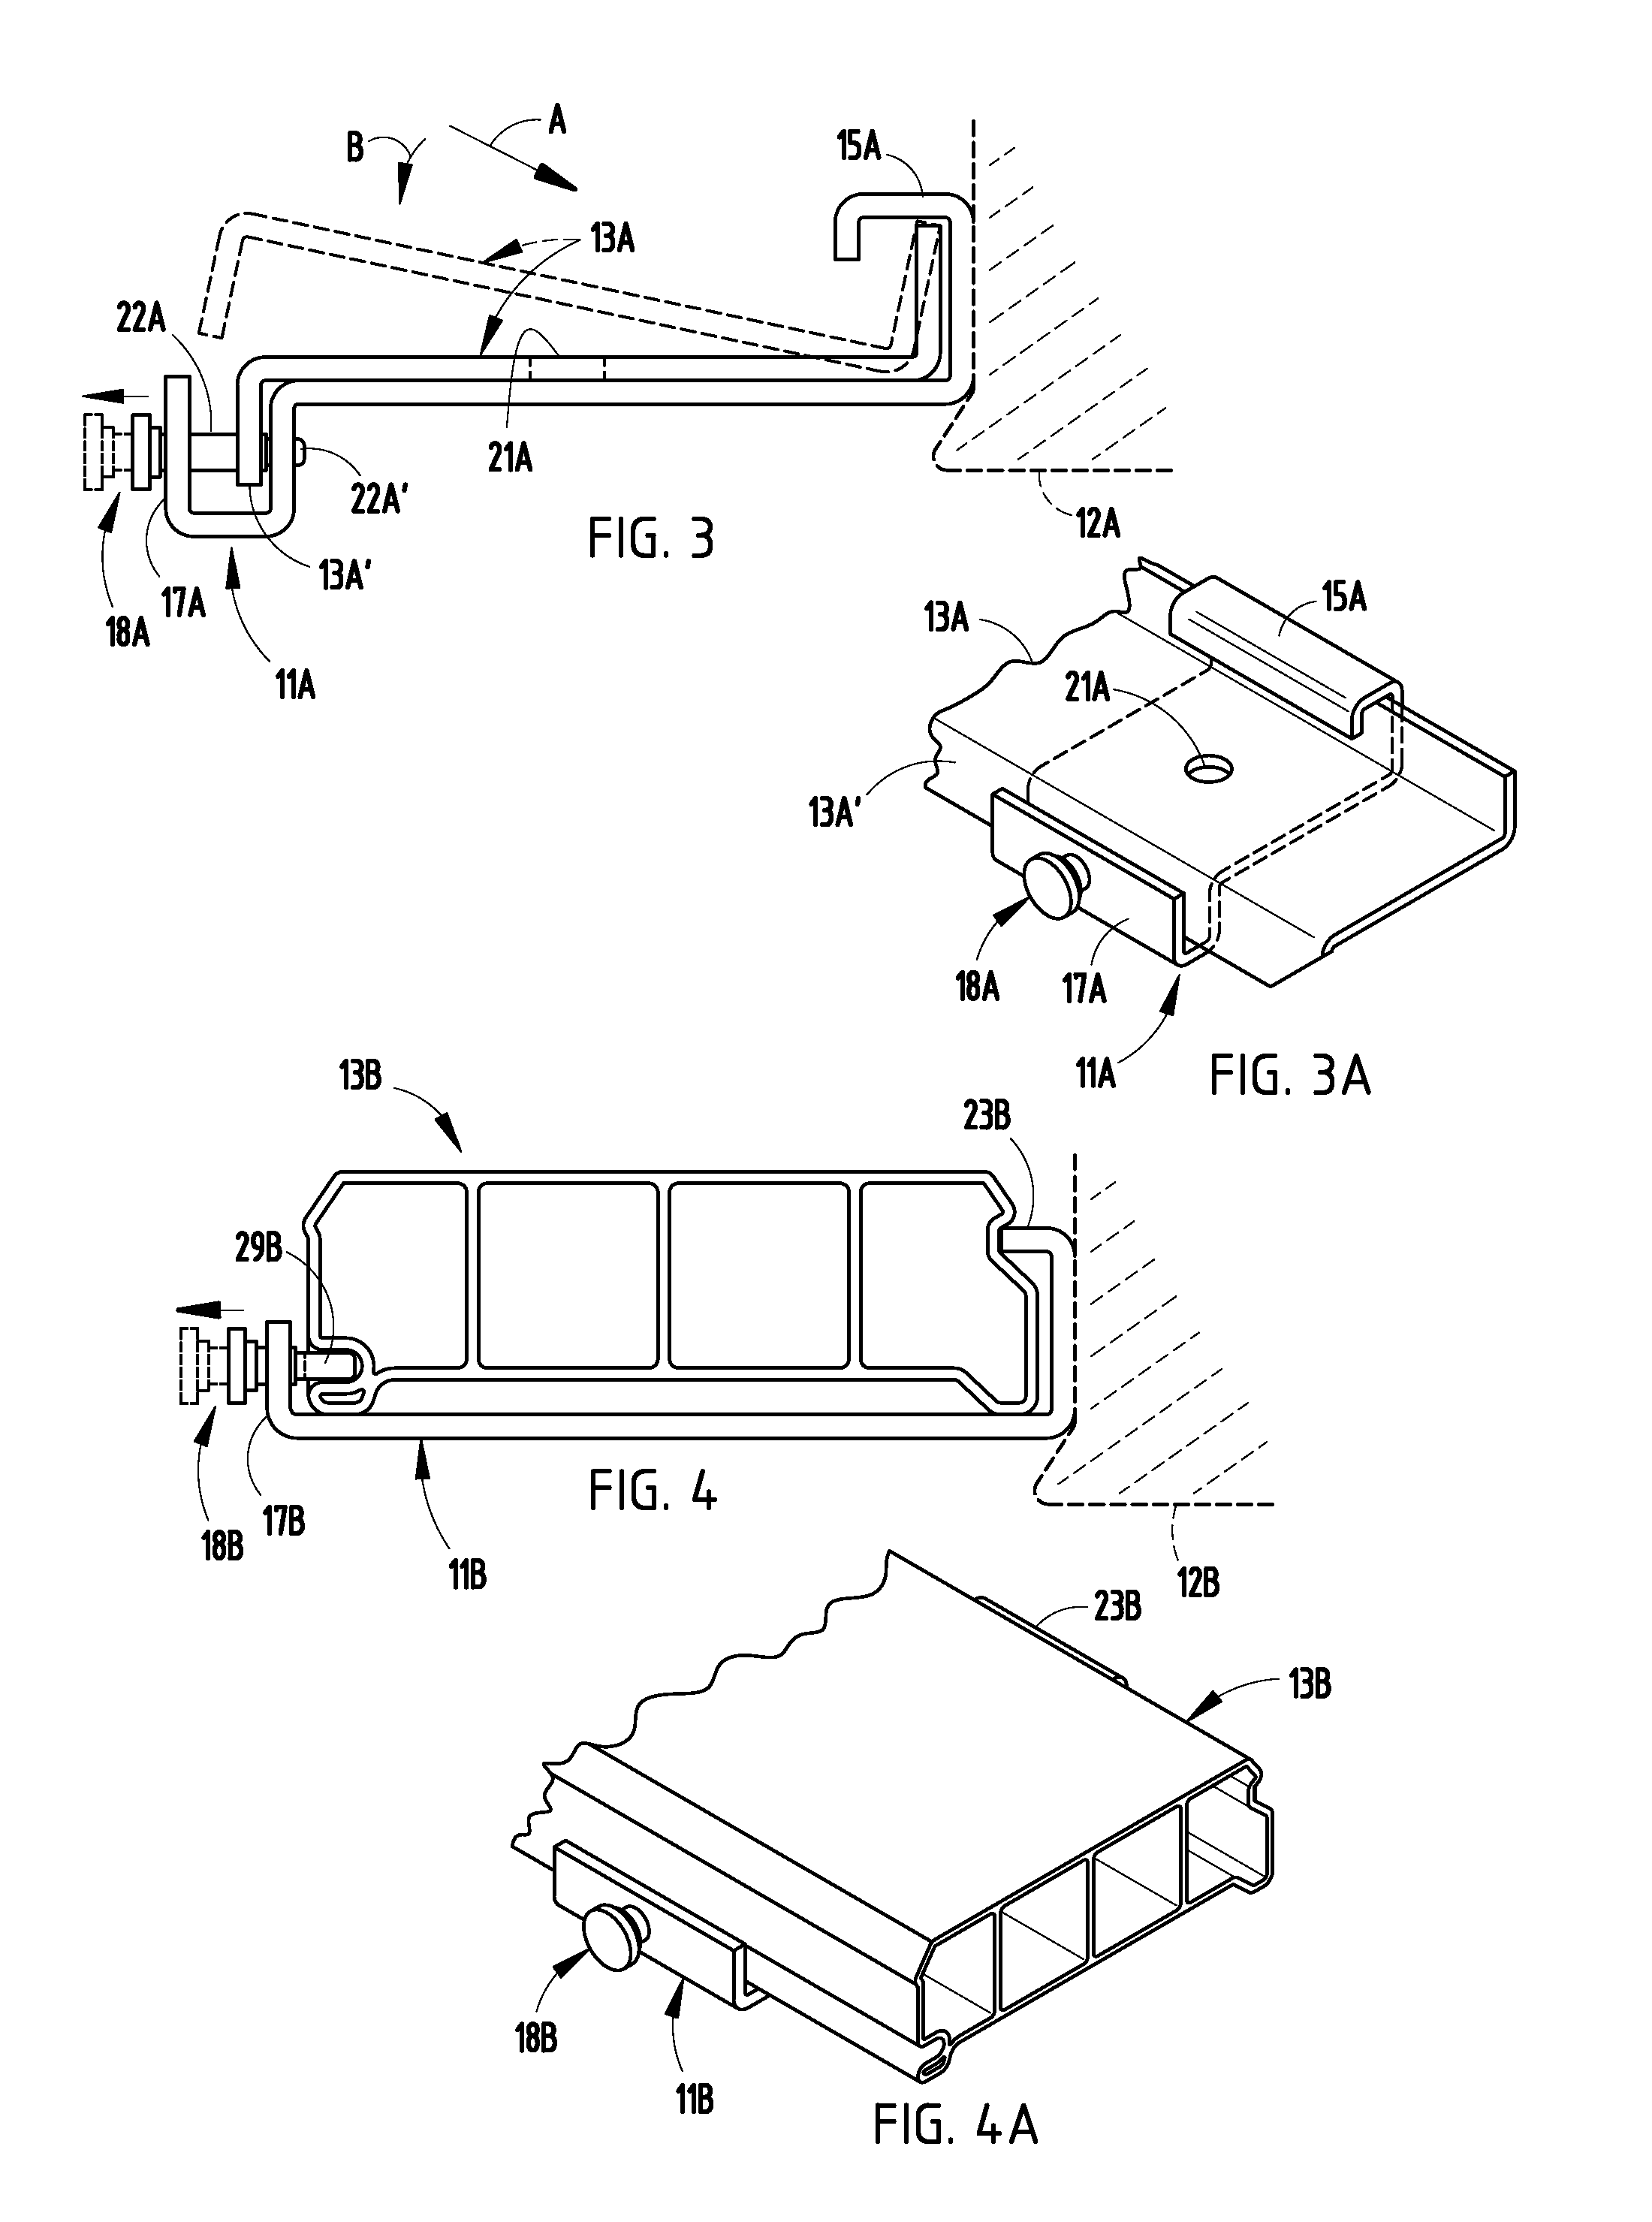 Multi-functional running board and ramp apparatus